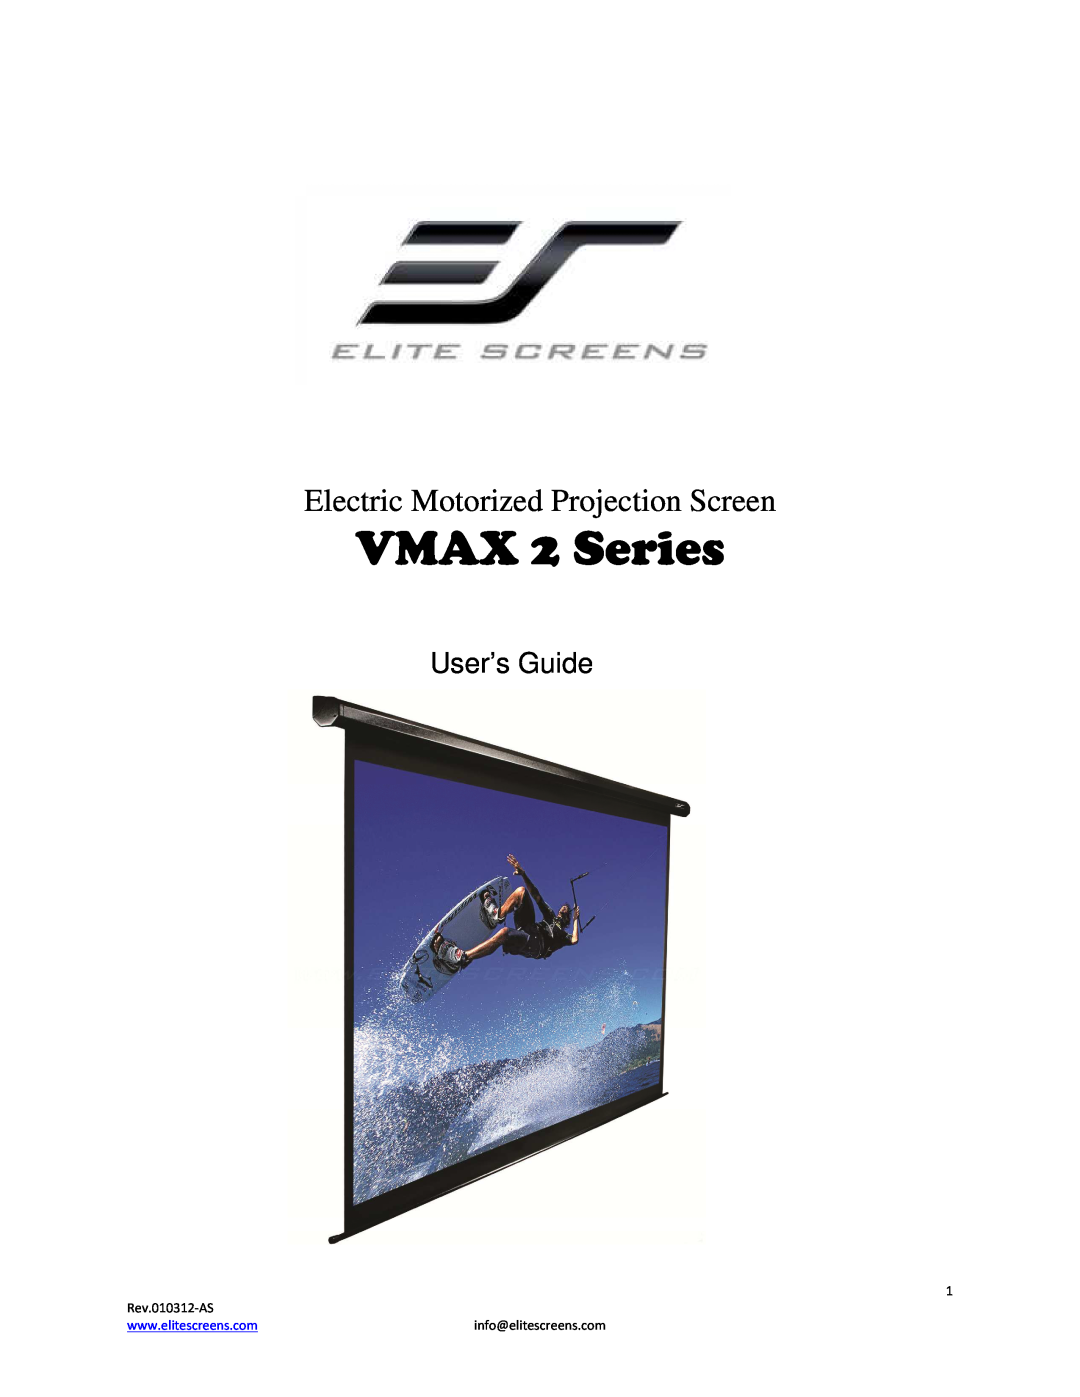 Elite Screens VMAX2 manual VMAX 2 SERIES, Electric Motorized Projection Screen, User’s Guide, Rev.010312-AS 